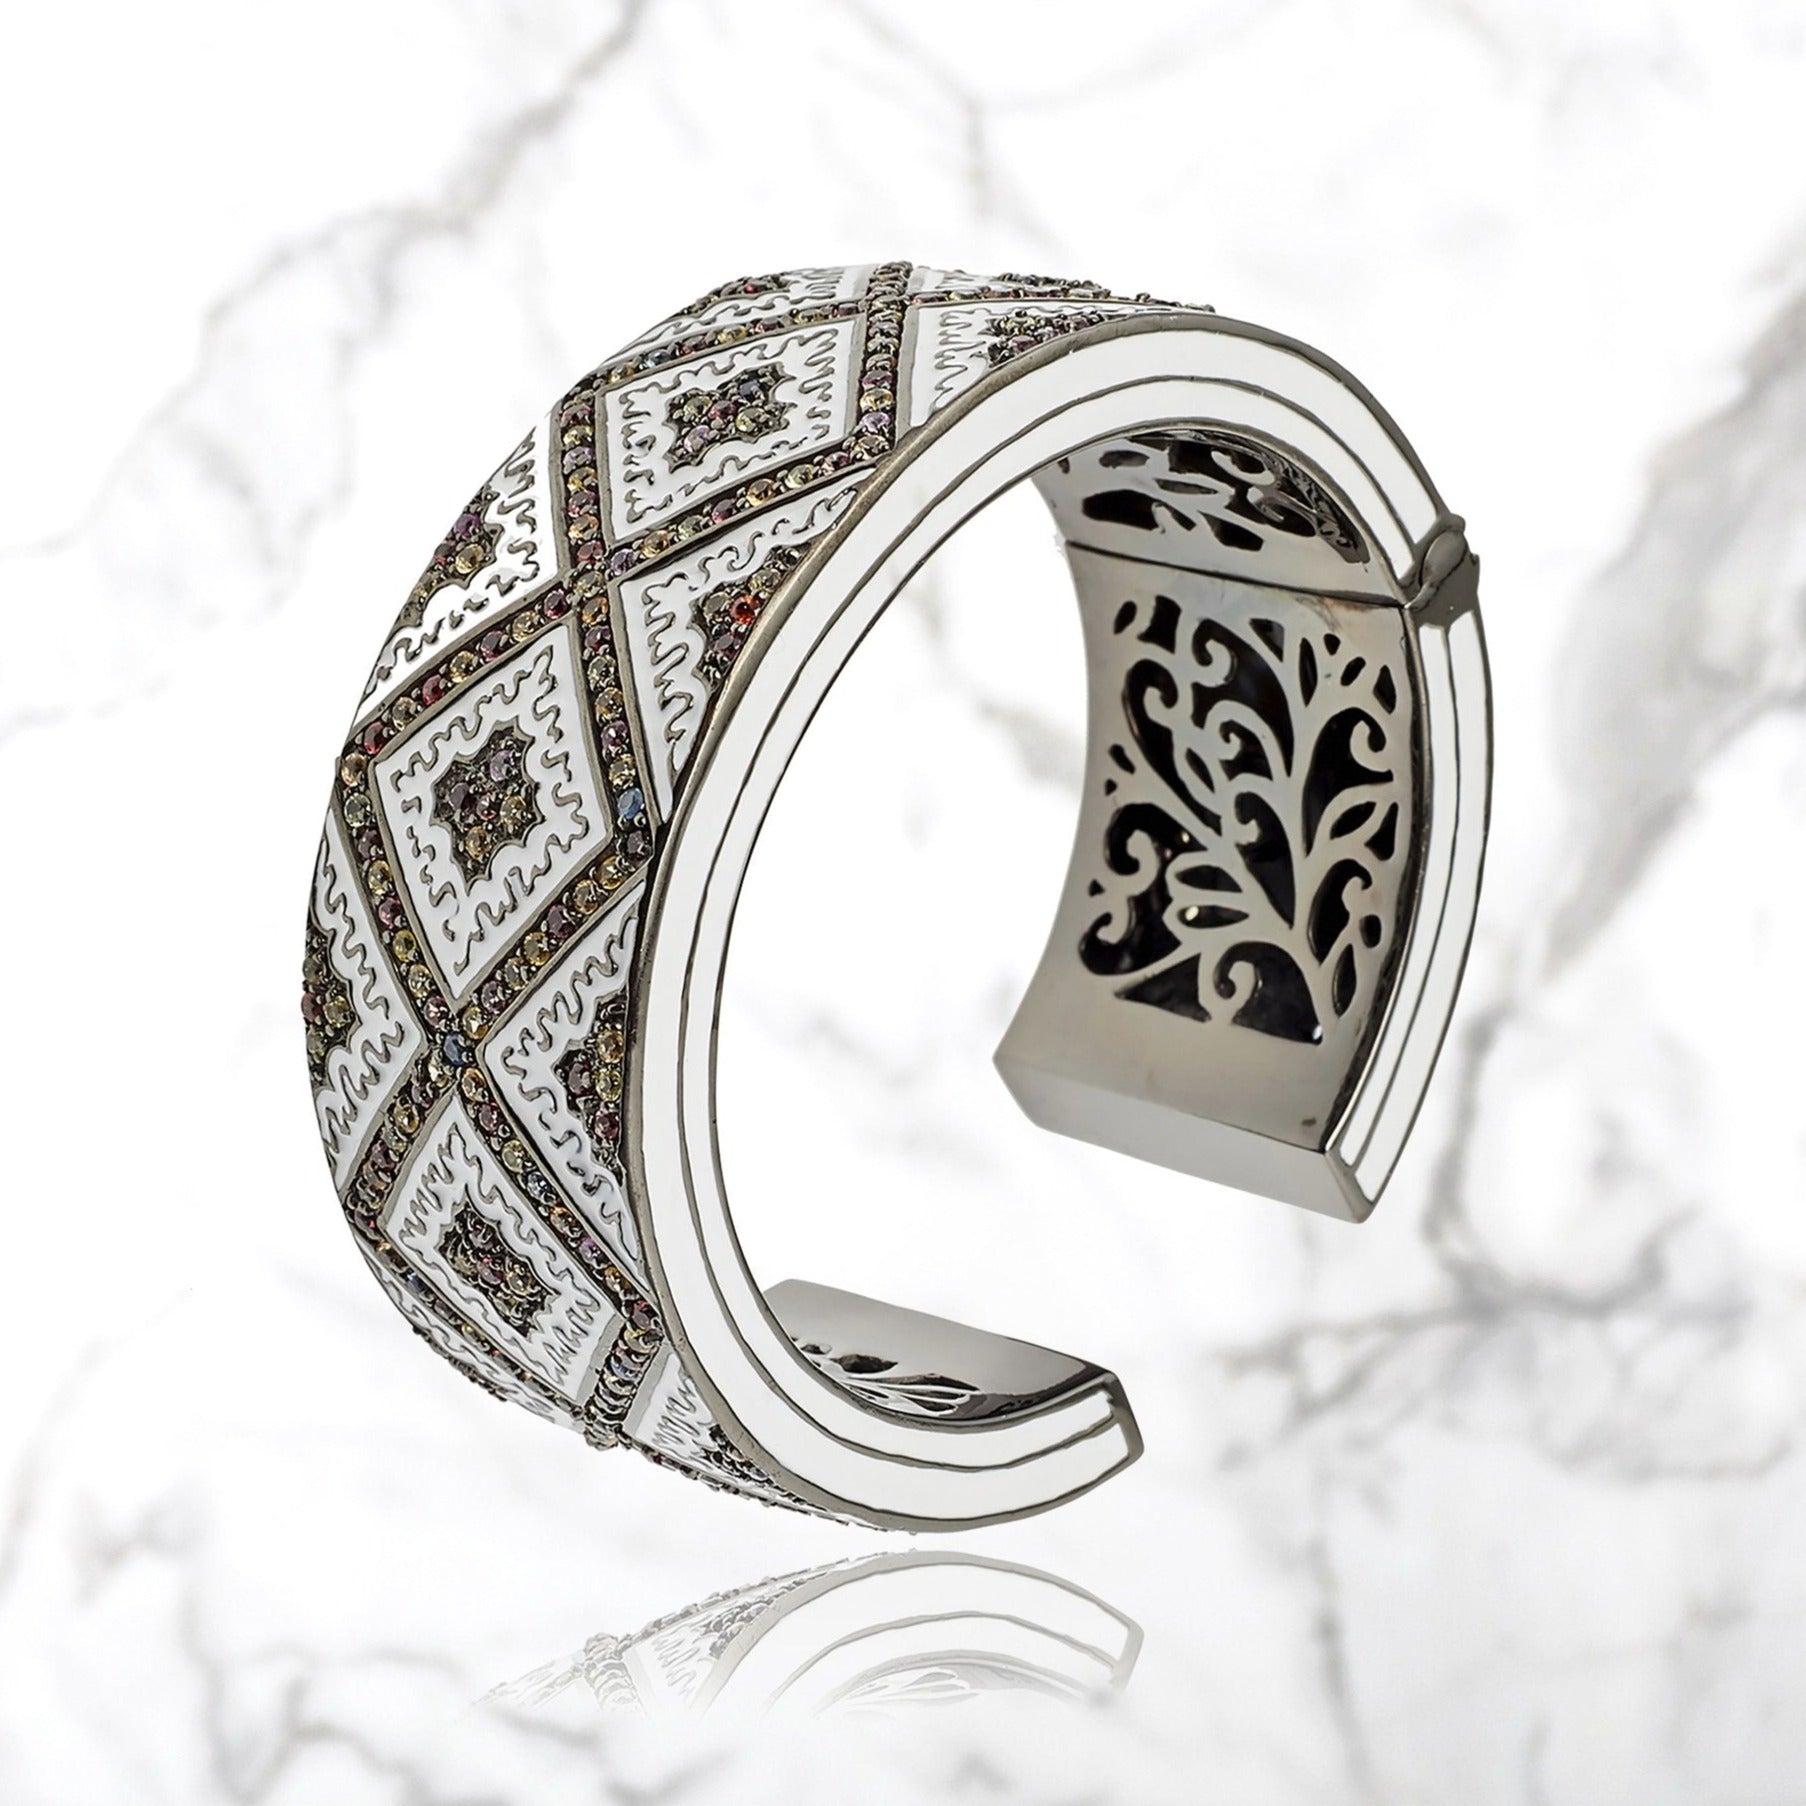 MCL Design Persian inspired cuff bracelet